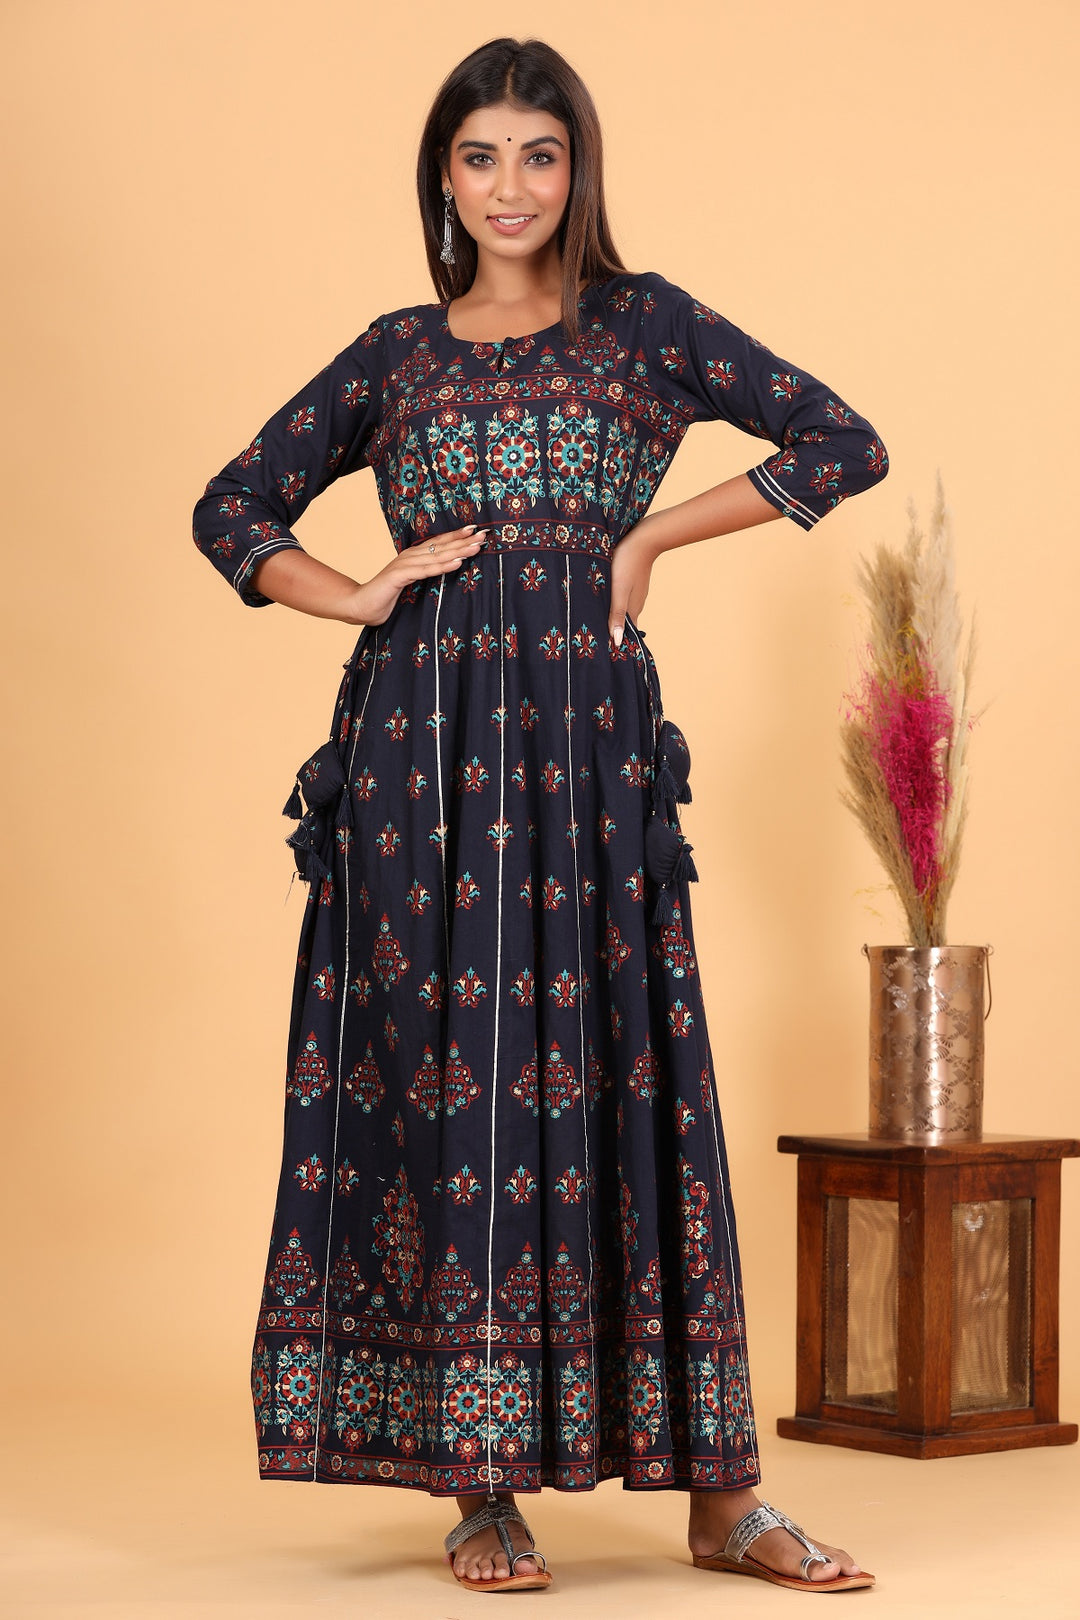 Buy a Blue Long Ethnic Gown for Women | Best Ethnic Dress Online for Women 